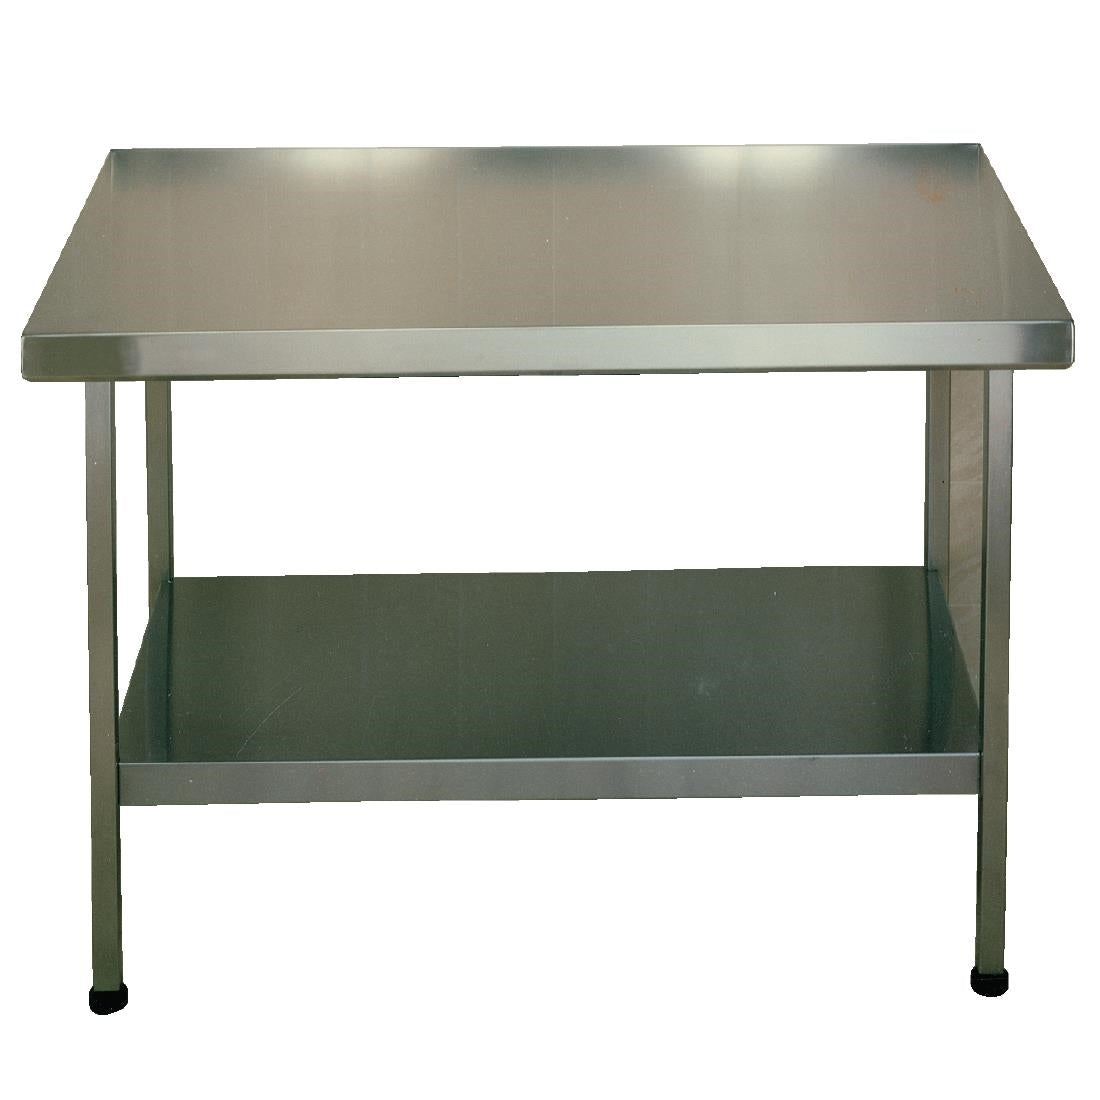 Franke Sissons Stainless Steel Centre Table 1800x650mm JD Catering Equipment Solutions Ltd